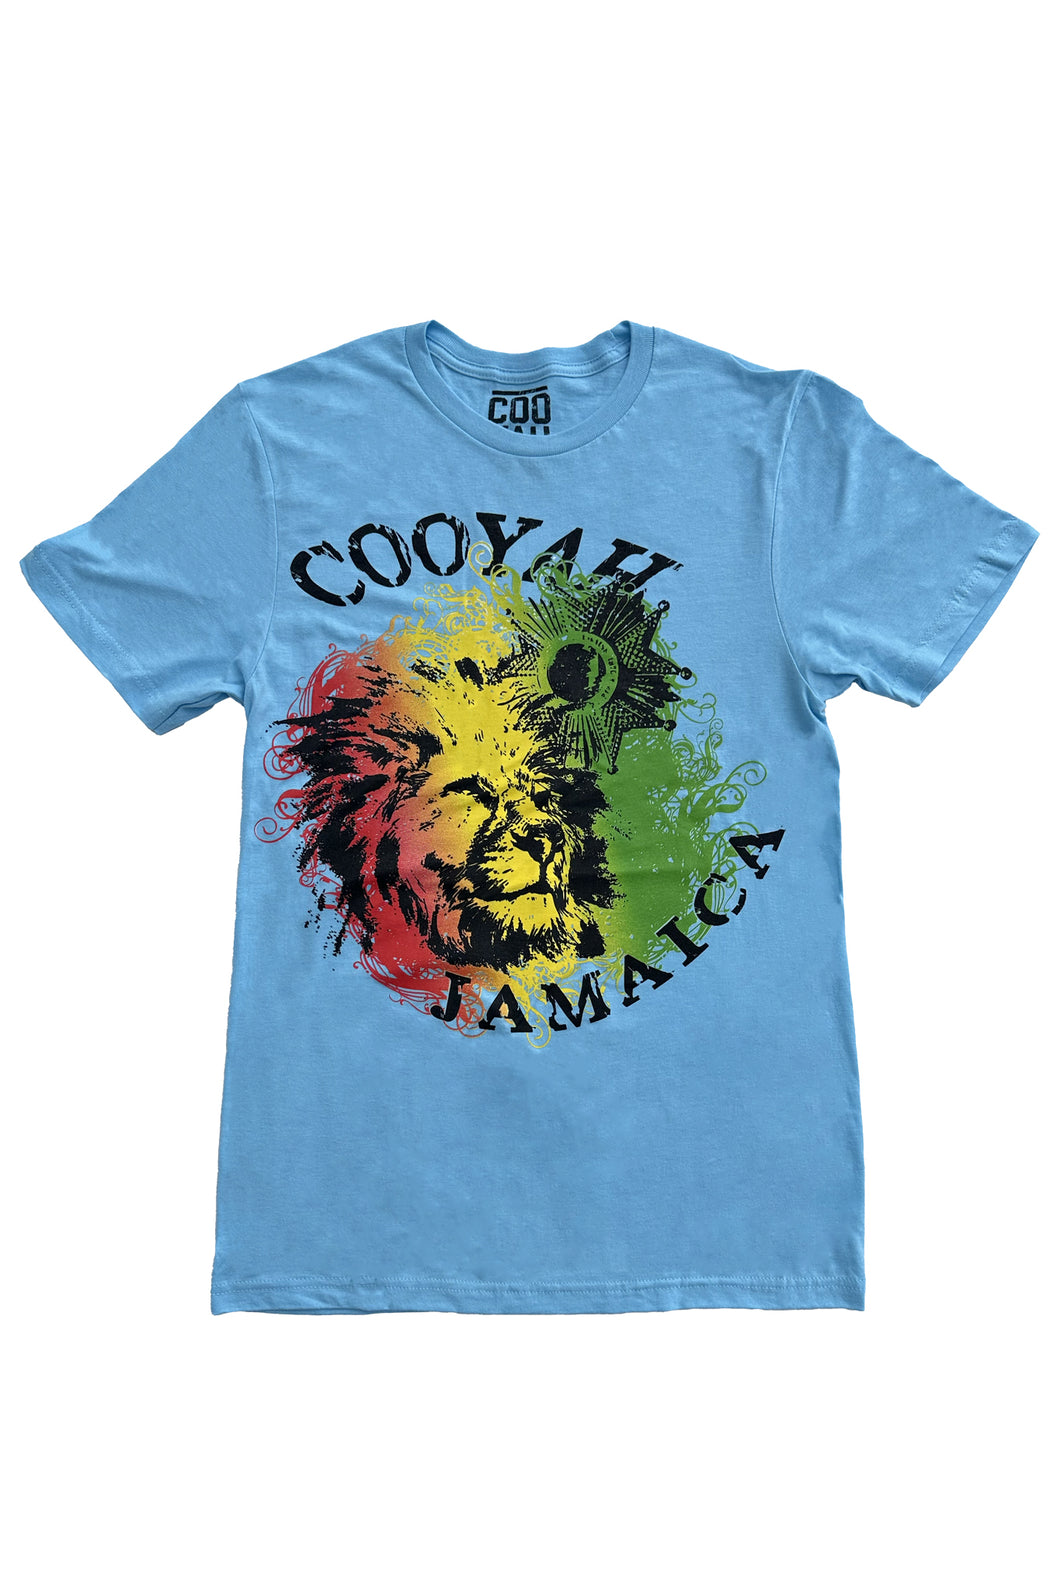 Cooyah Jamaica.  Men's Rasta Lion graphic tee.  Crew neck, short sleeve t-shirt.  Screen printed in reggae colors.  IRIE